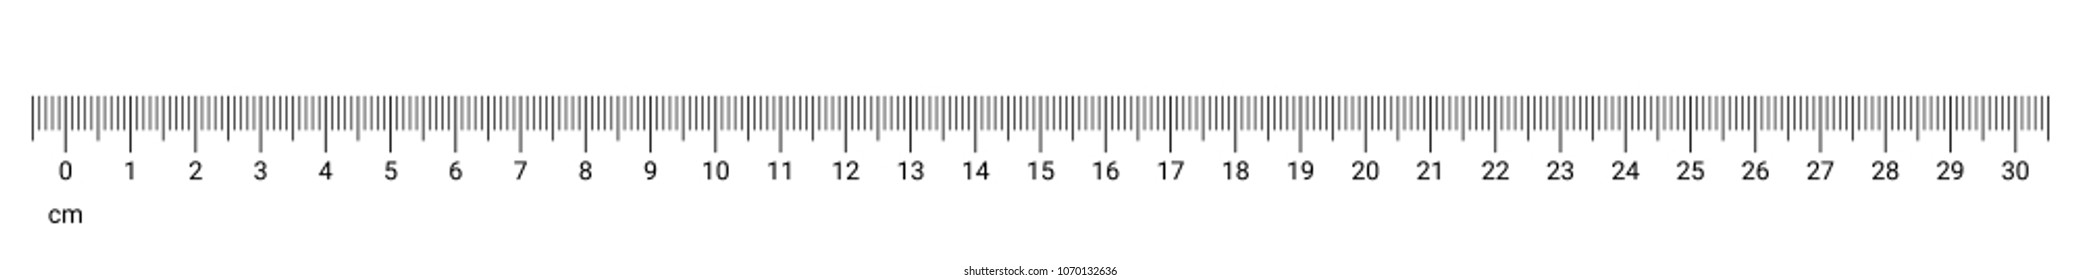 Centimeter Measurement Chart